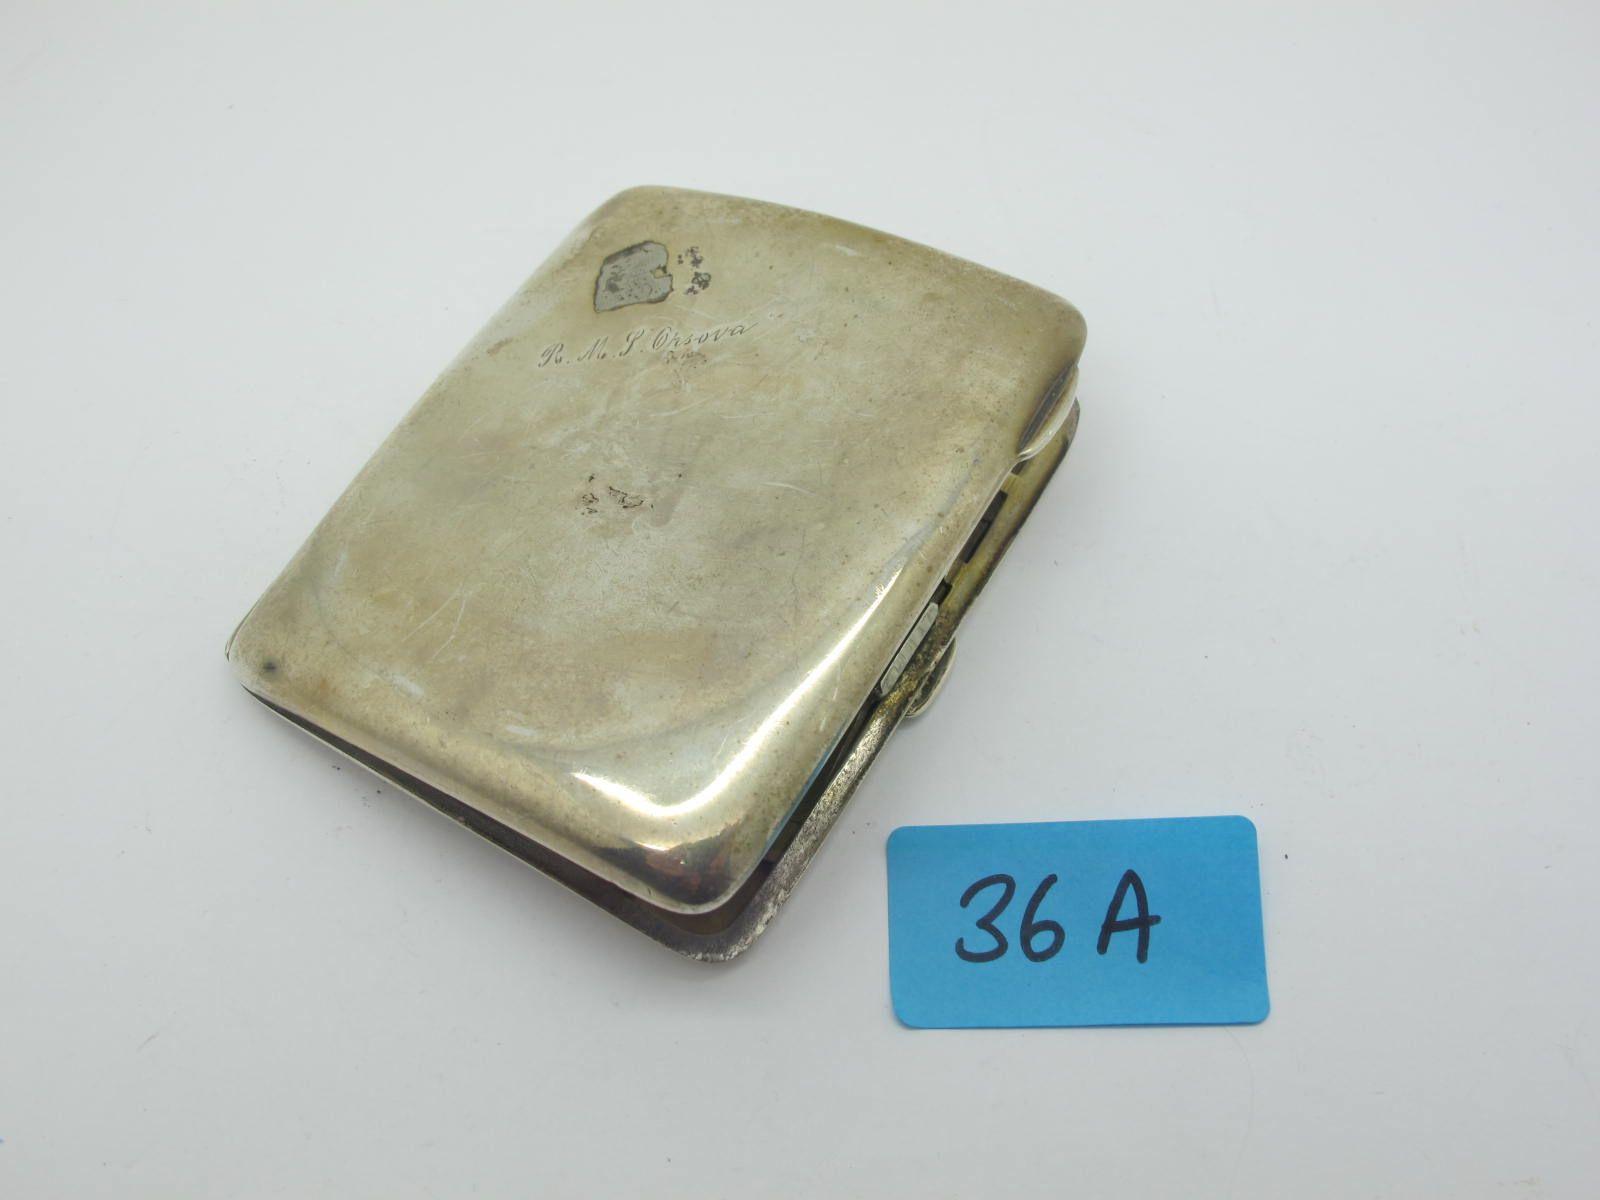 A Hallmarked Silver Cigarette Case, (dents) inscribed "RMS Orsova".